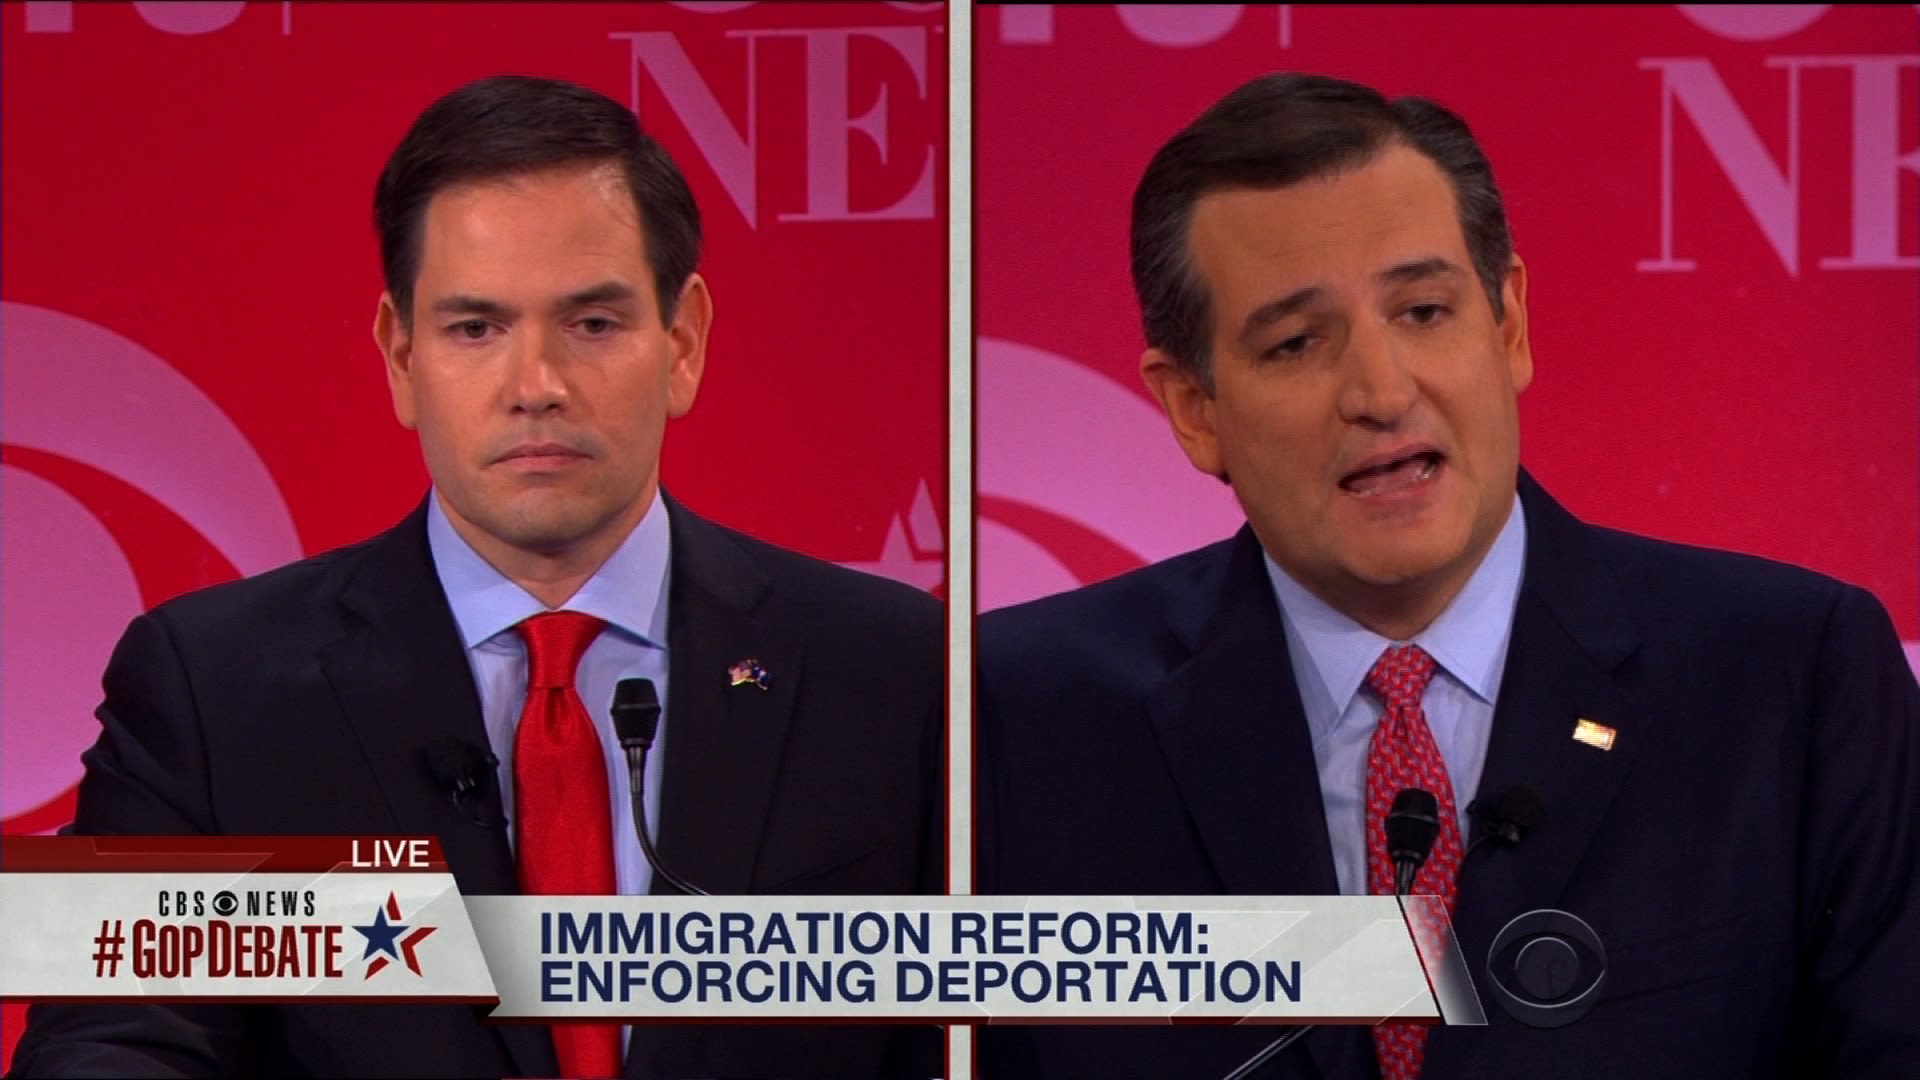 Marco Rubio accuses Ted Cruz of lying | CNN Politics